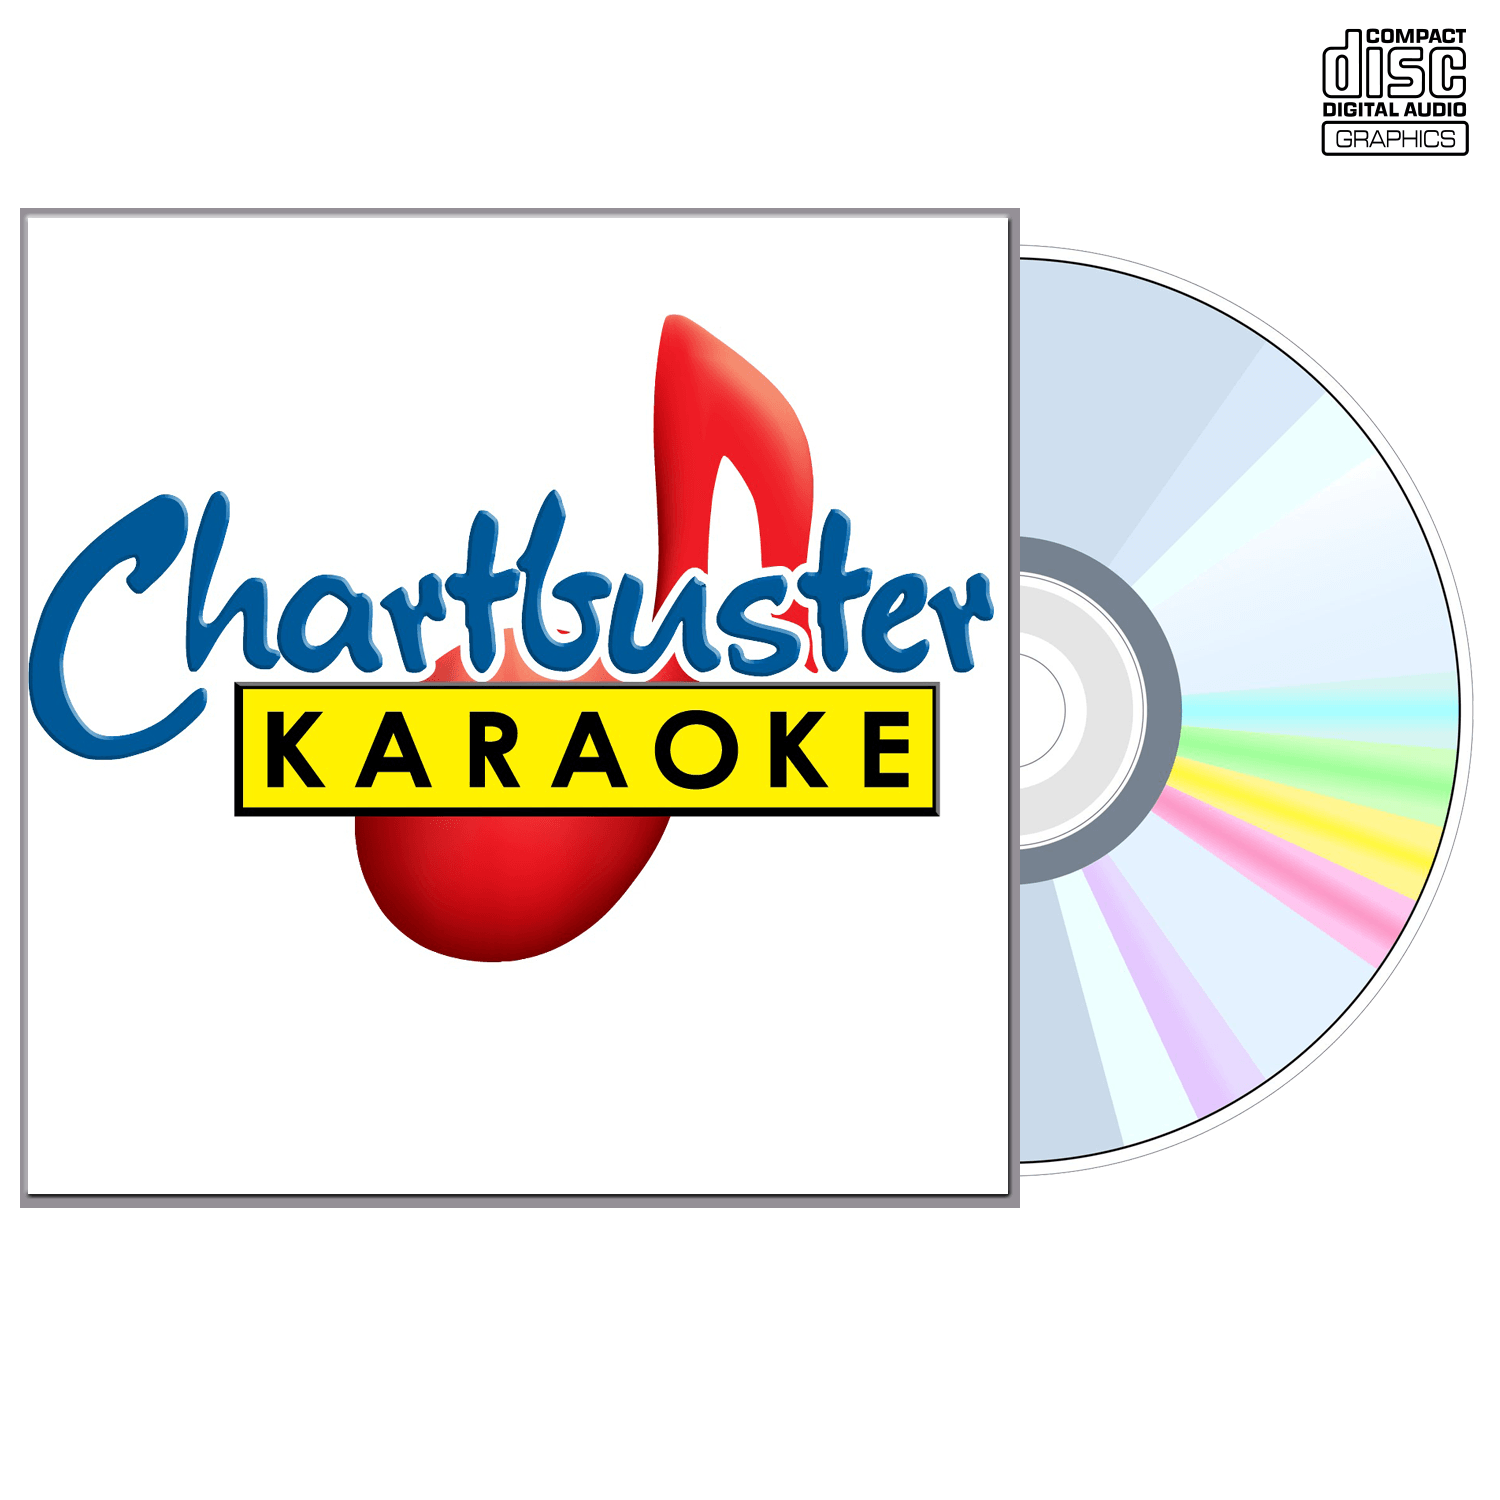 Weezer - CD+G - Chartbuster Karaoke - Karaoke Home Entertainment